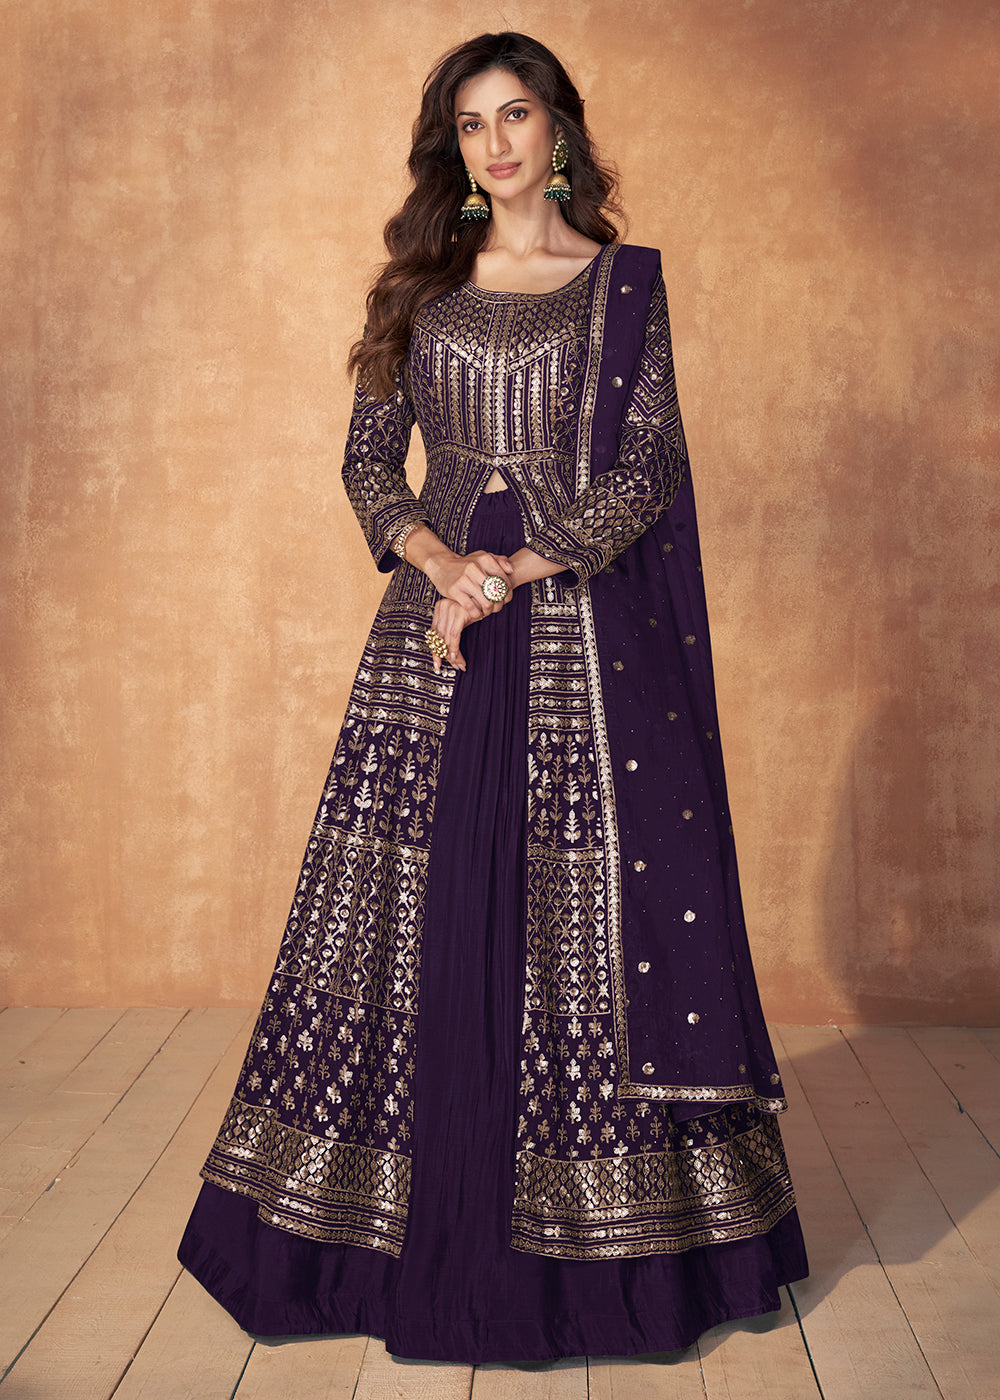 Buy Now Plum Purple Skirt Style Embroidered Wedding Anarkali Suit Online in USA, UK, Australia, New Zealand, Canada & Worldwide at Empress Clothing.